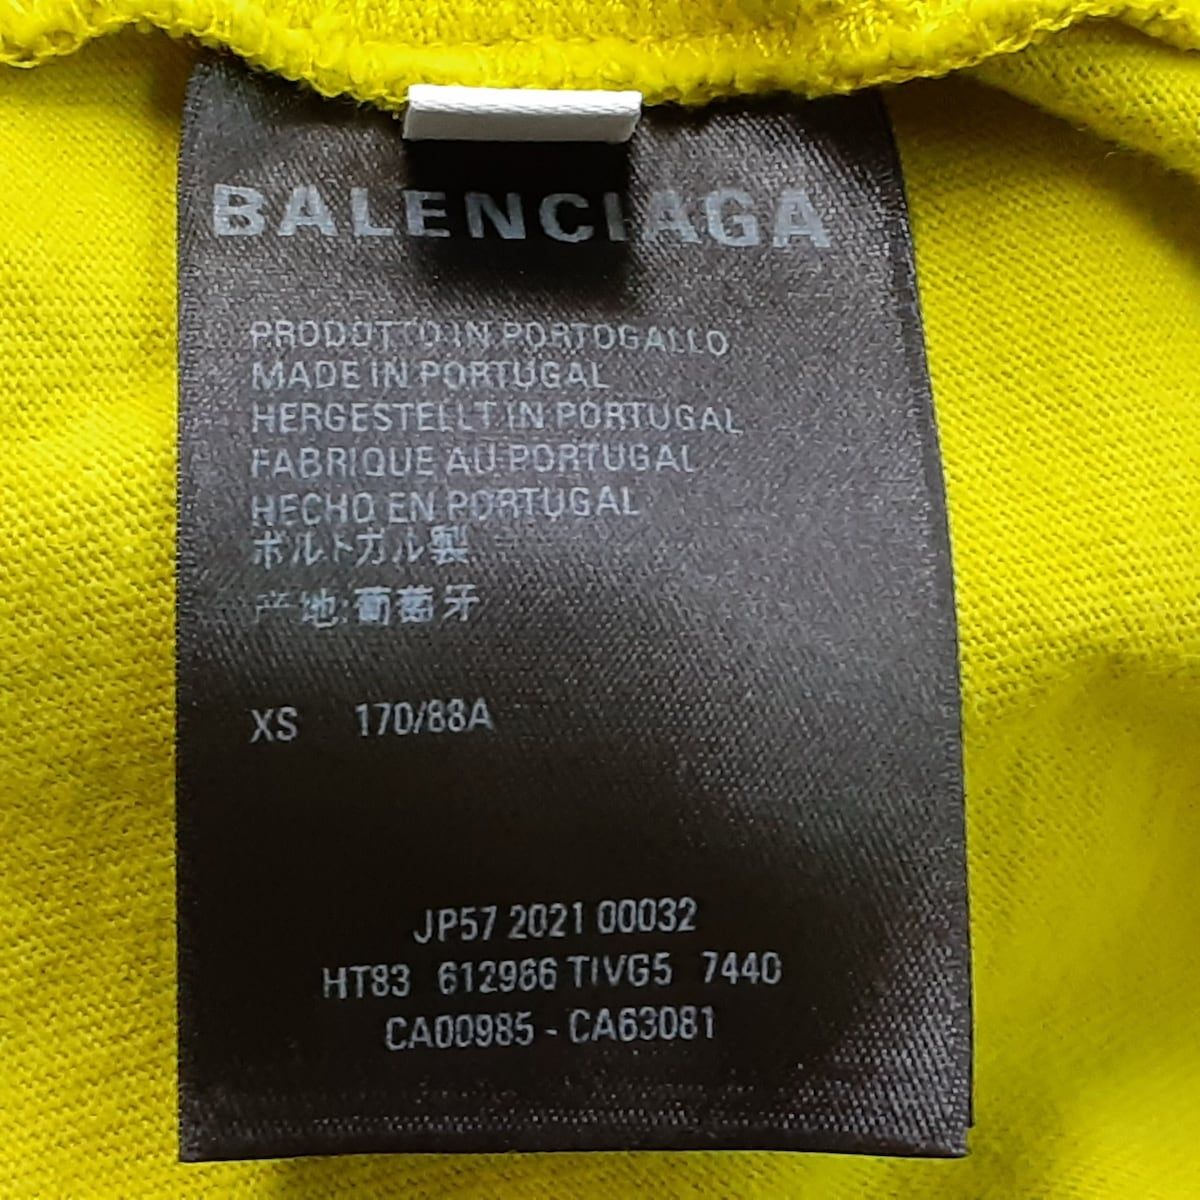 BALENCIAGA(バレンシアガ) 半袖Tシャツ サイズXS ユニセックス美品 